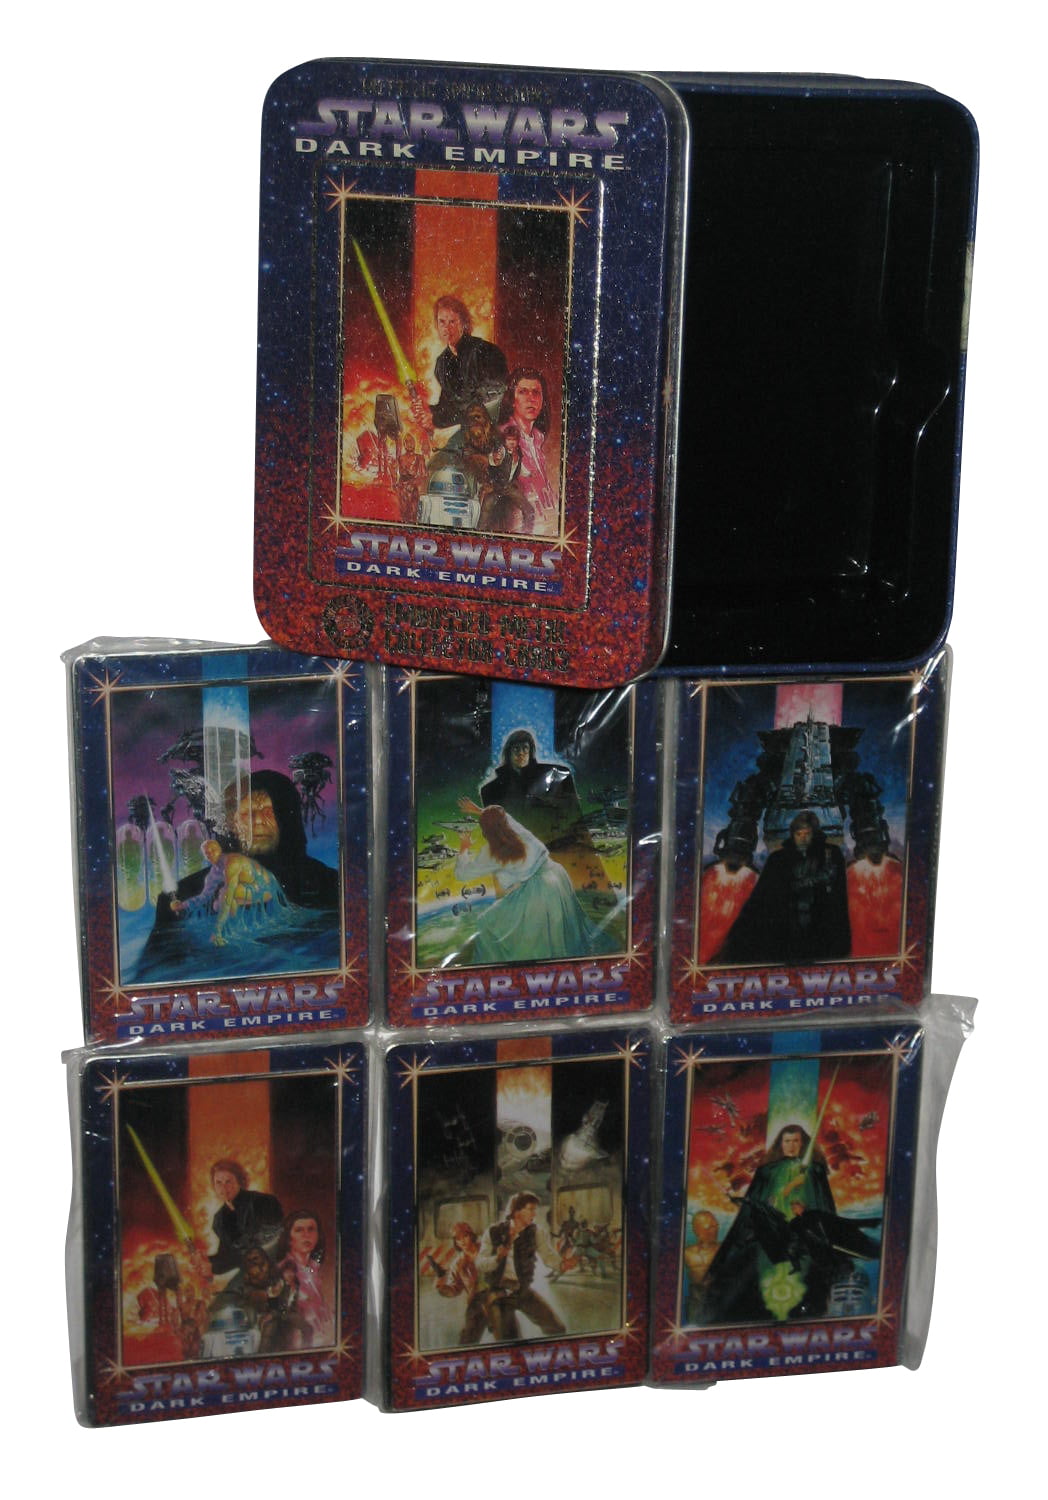 star wars metal collector cards